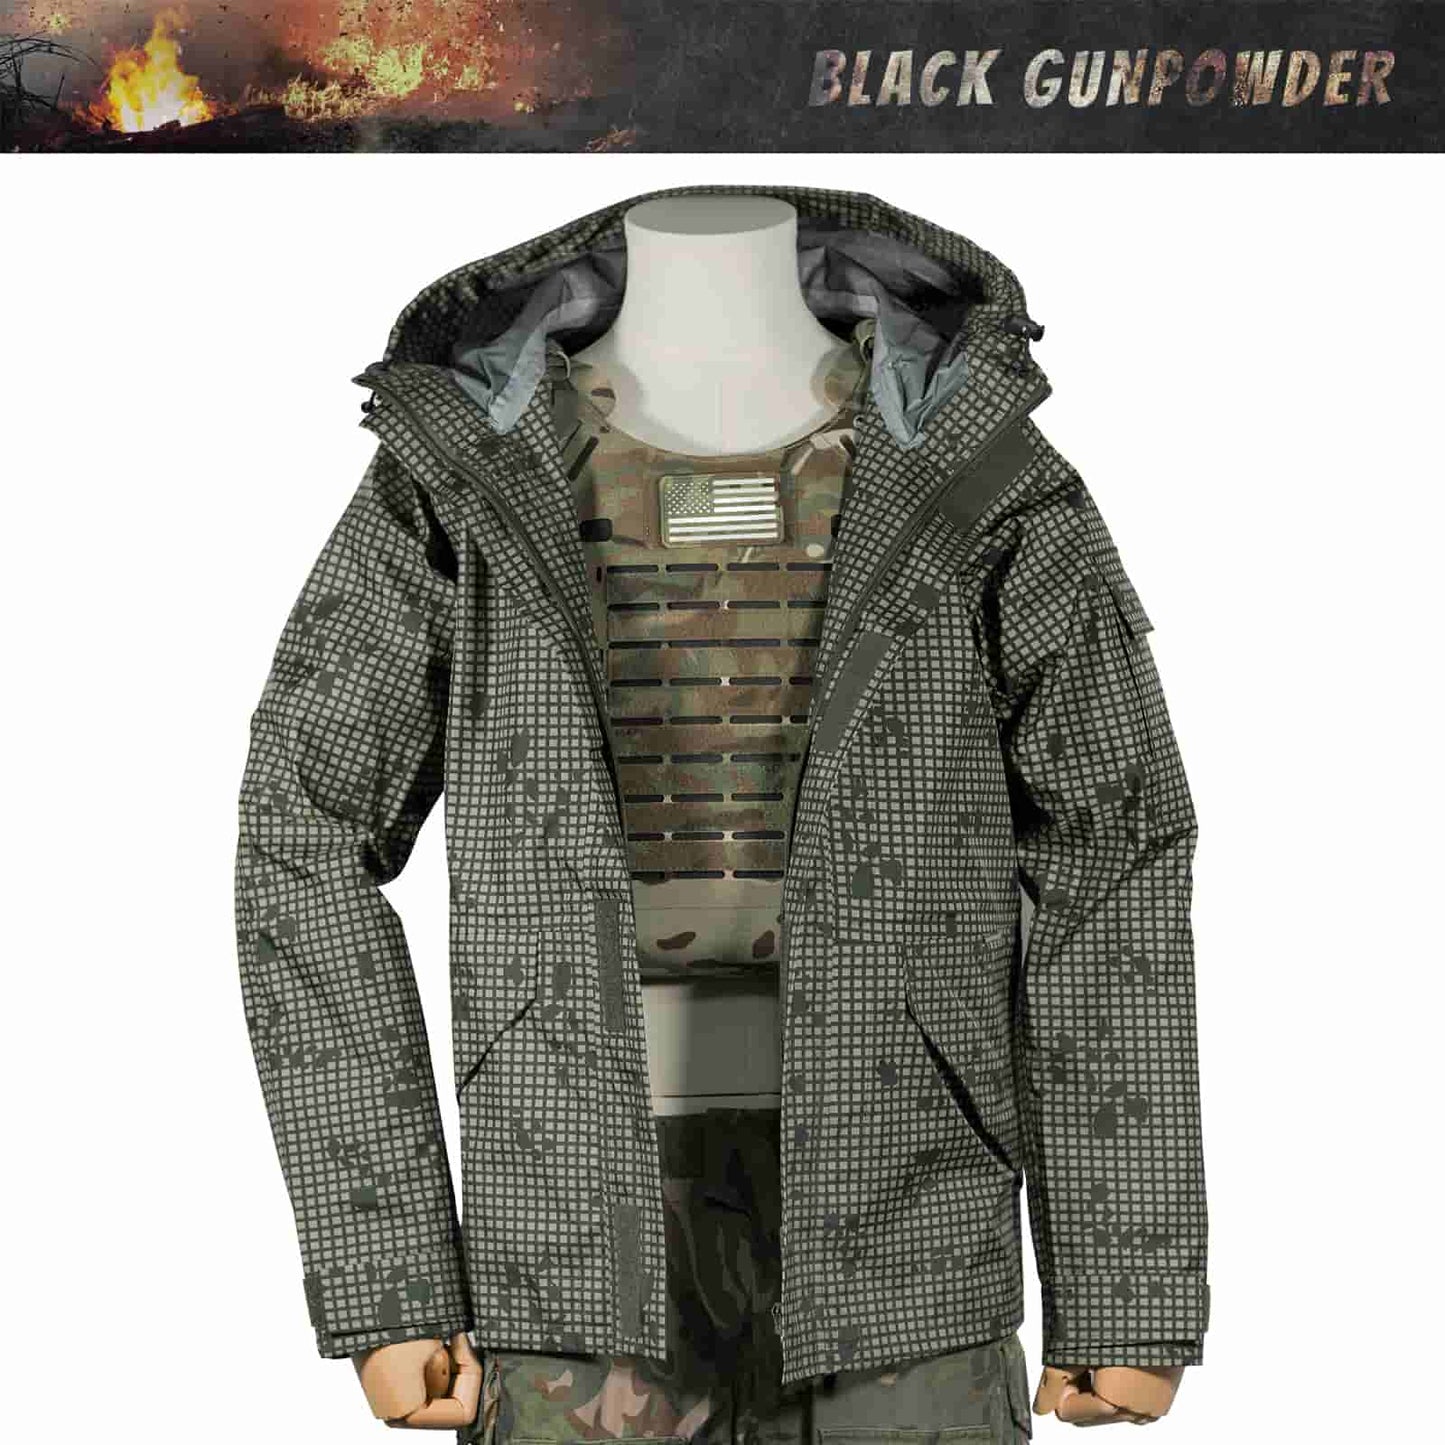 BLACK GUNPOWDER Men’s Waterproof Lightweight Hooded Raincoat Shell Jacket Desert Night Military Tactical Camouflage Outdoor Multifunction